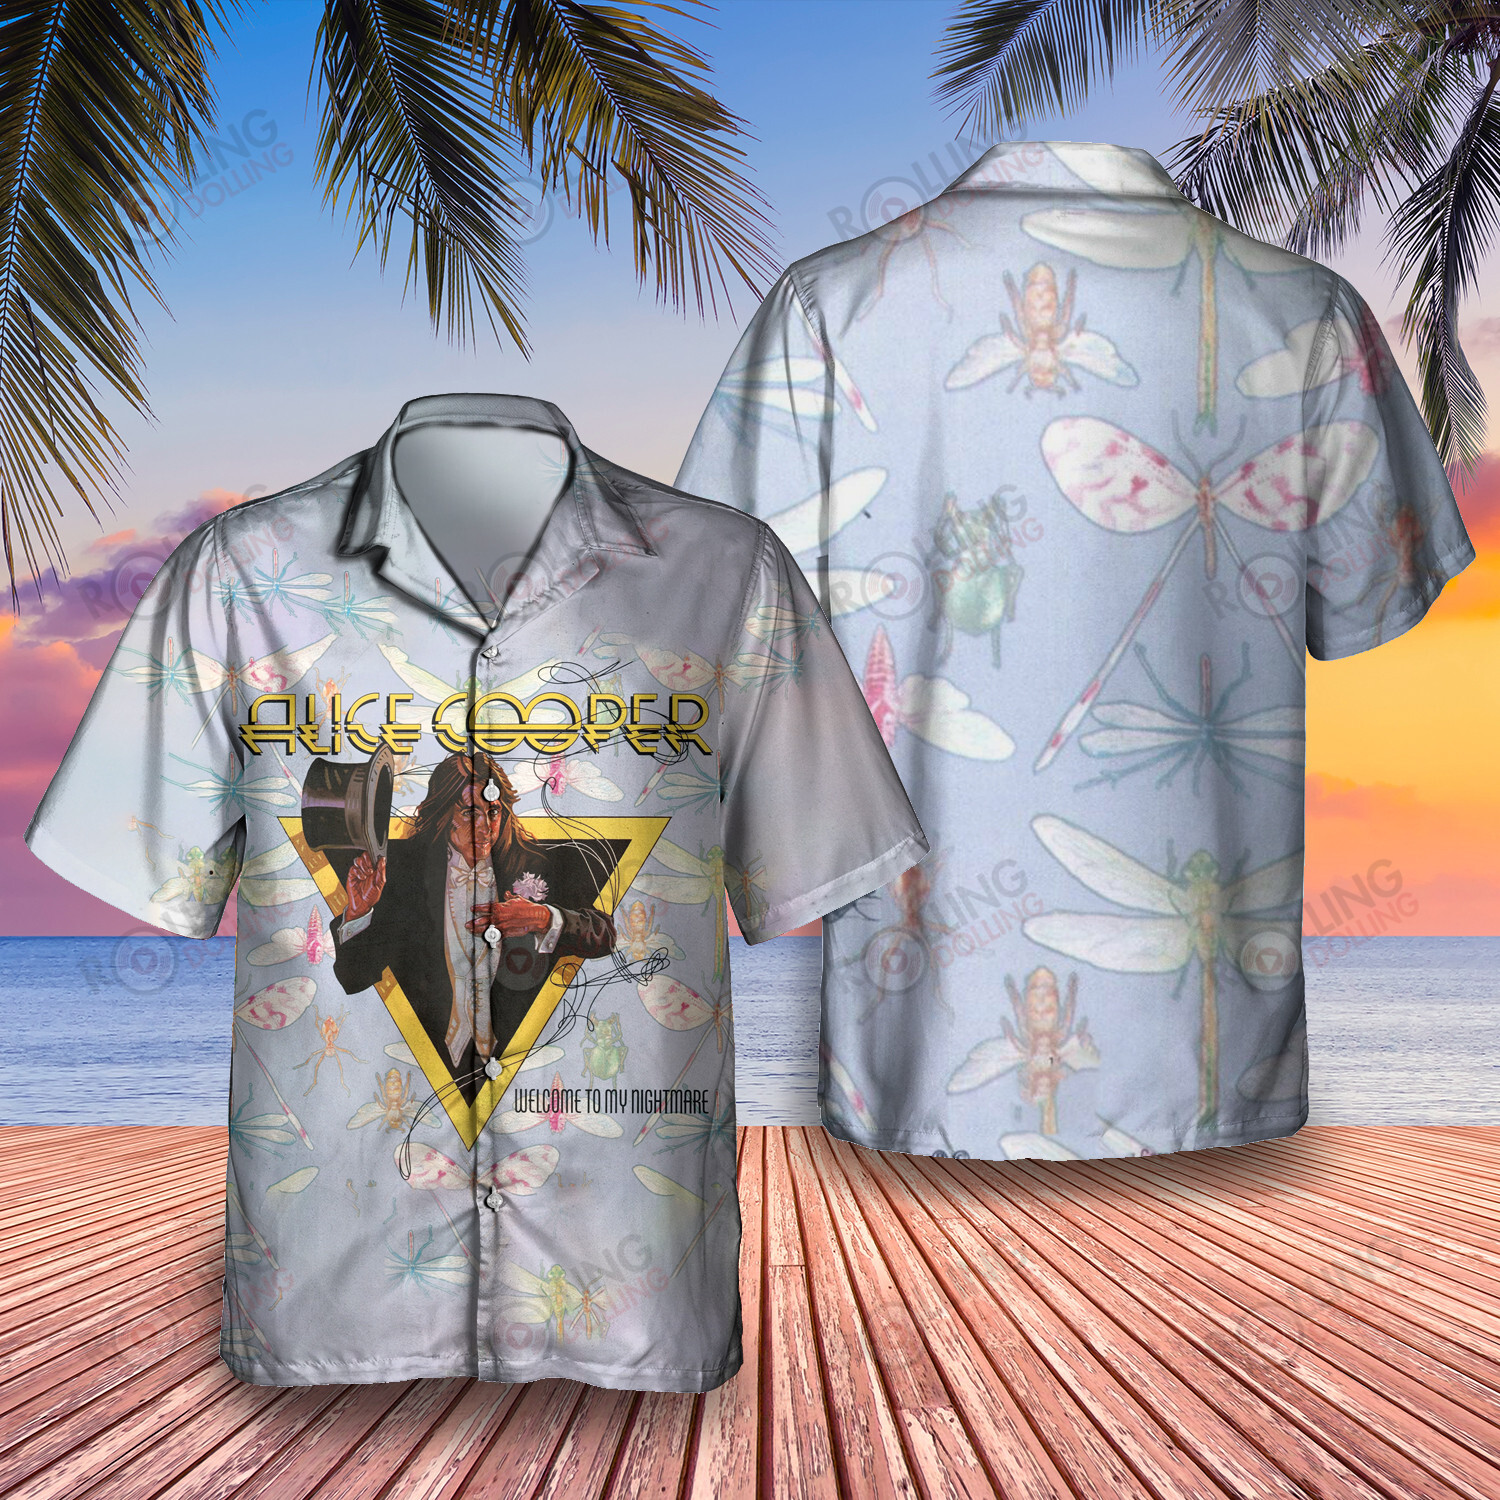 HOT Alice Cooper Welcome to My Nightmare Album Tropical Shirt1